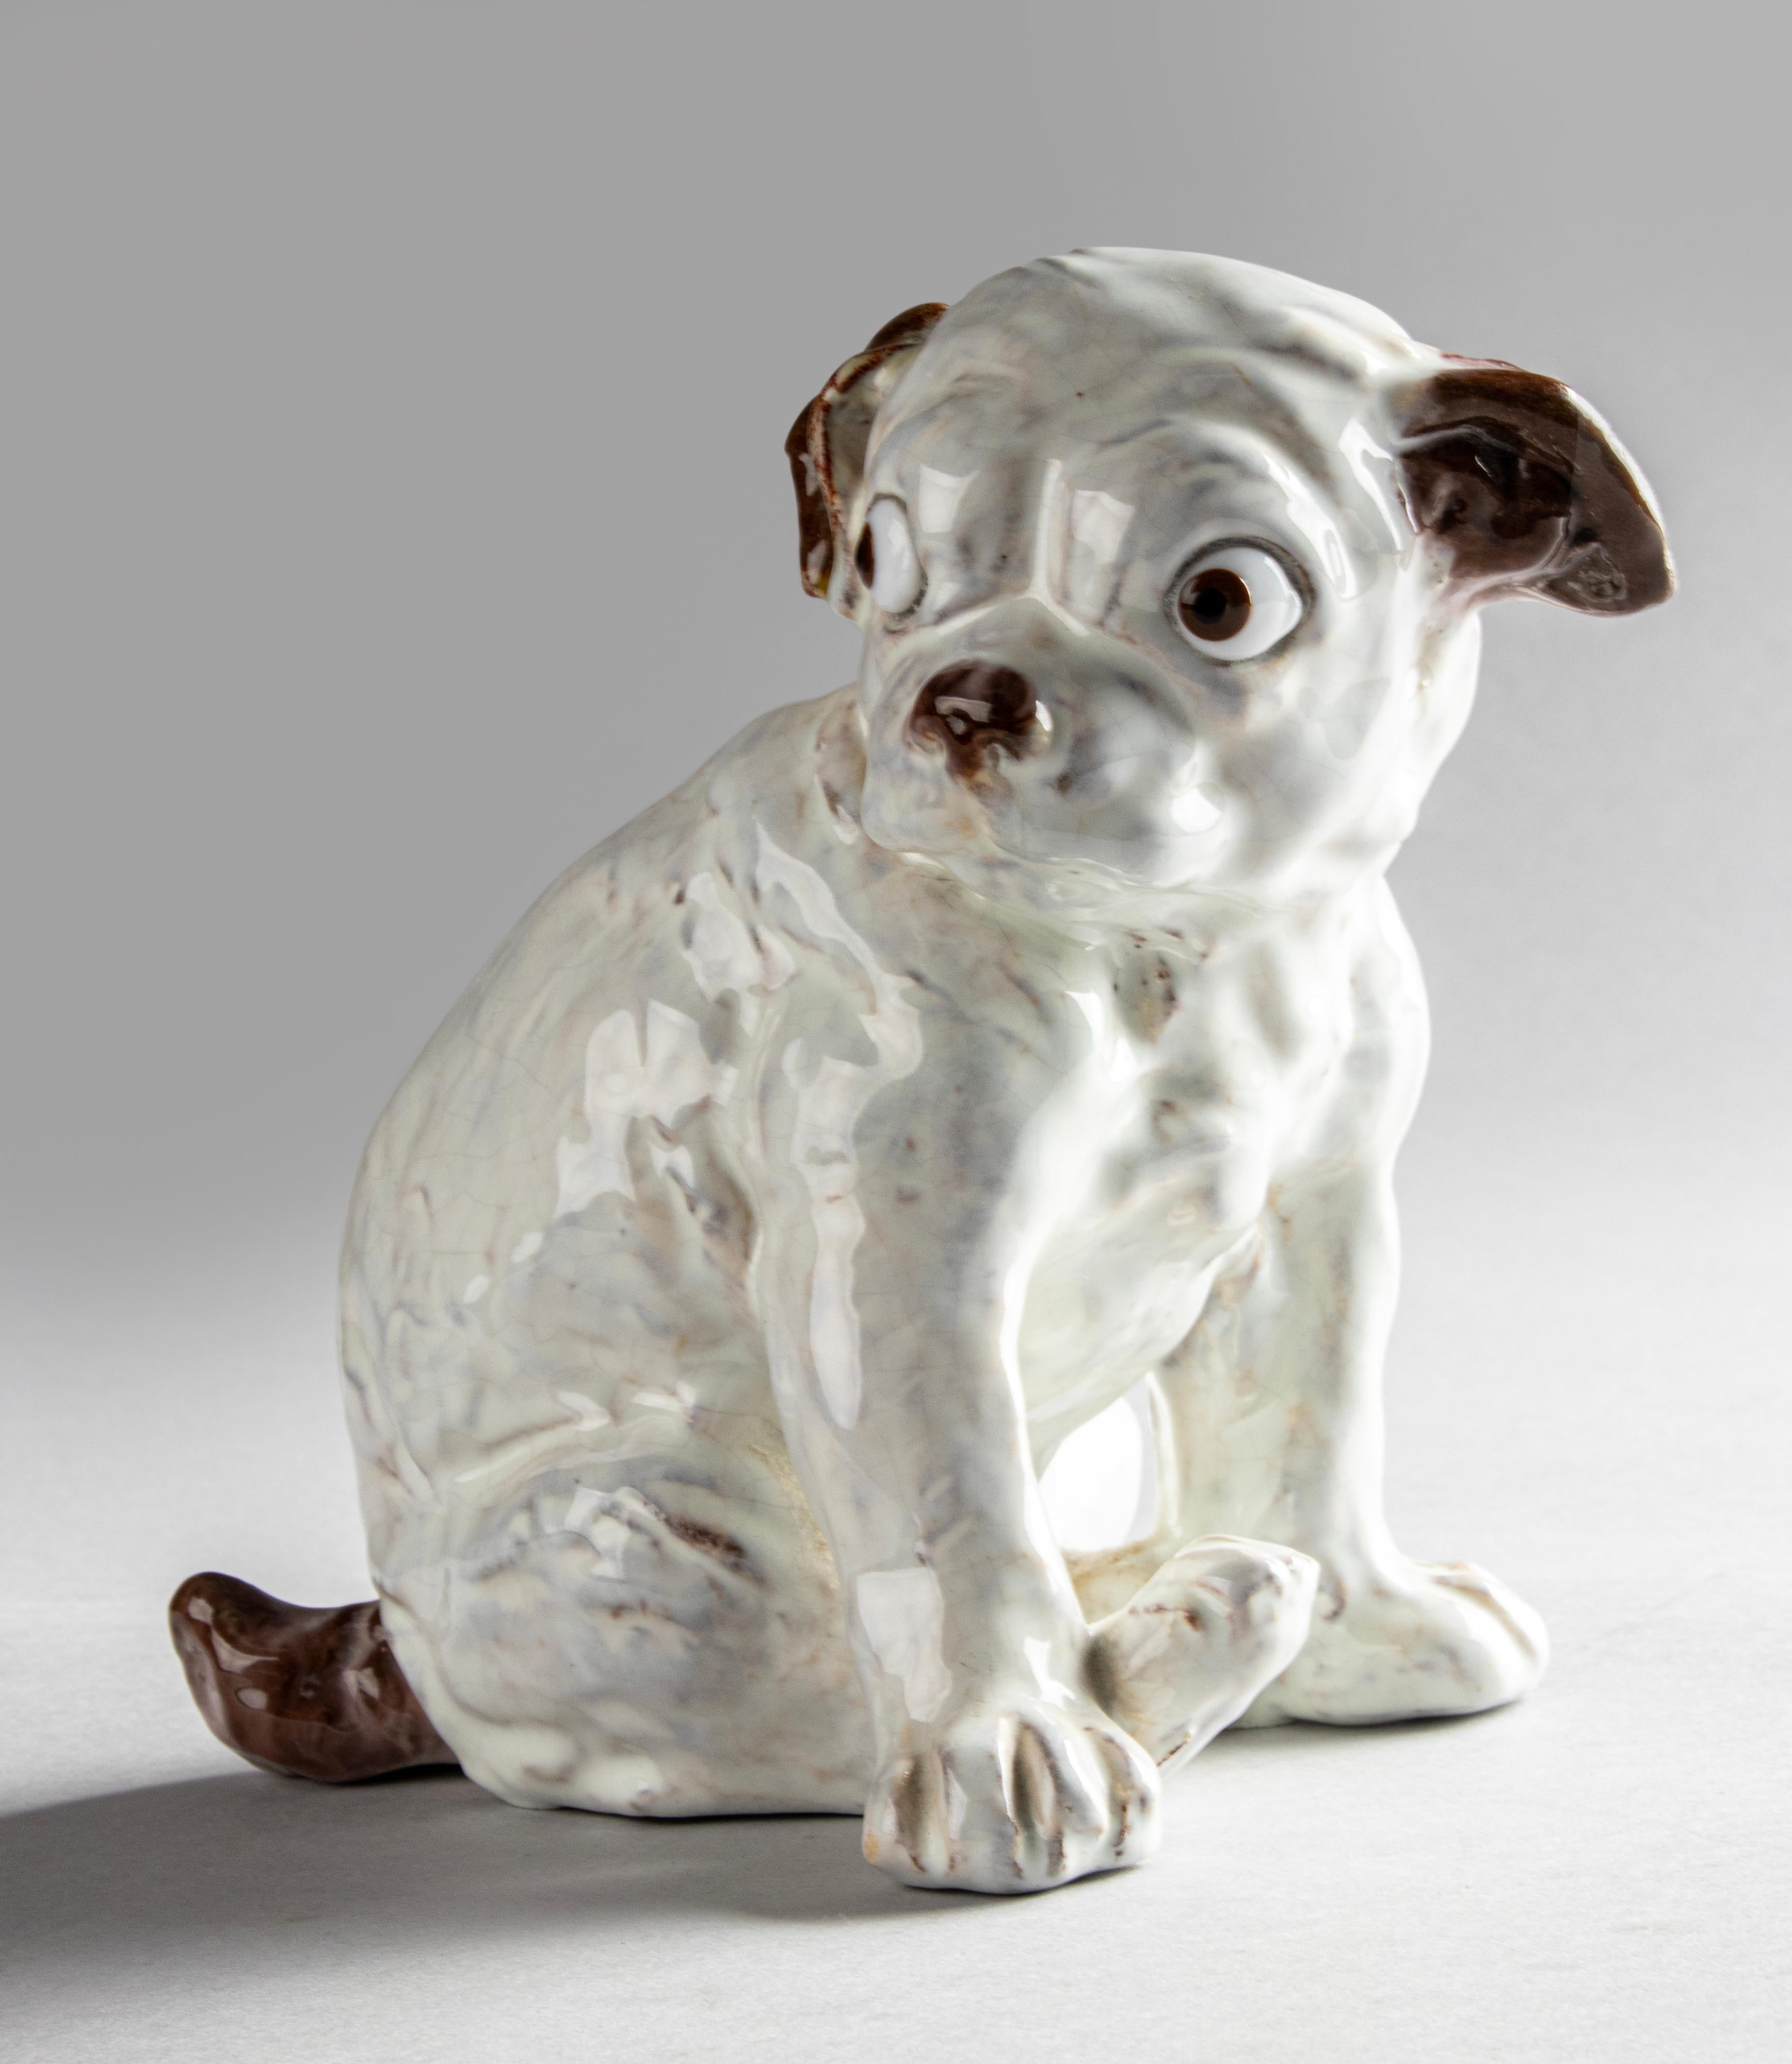 19th Century Ceramic Sculpture of a Pug Dog by J. Filmont Caen, France 1